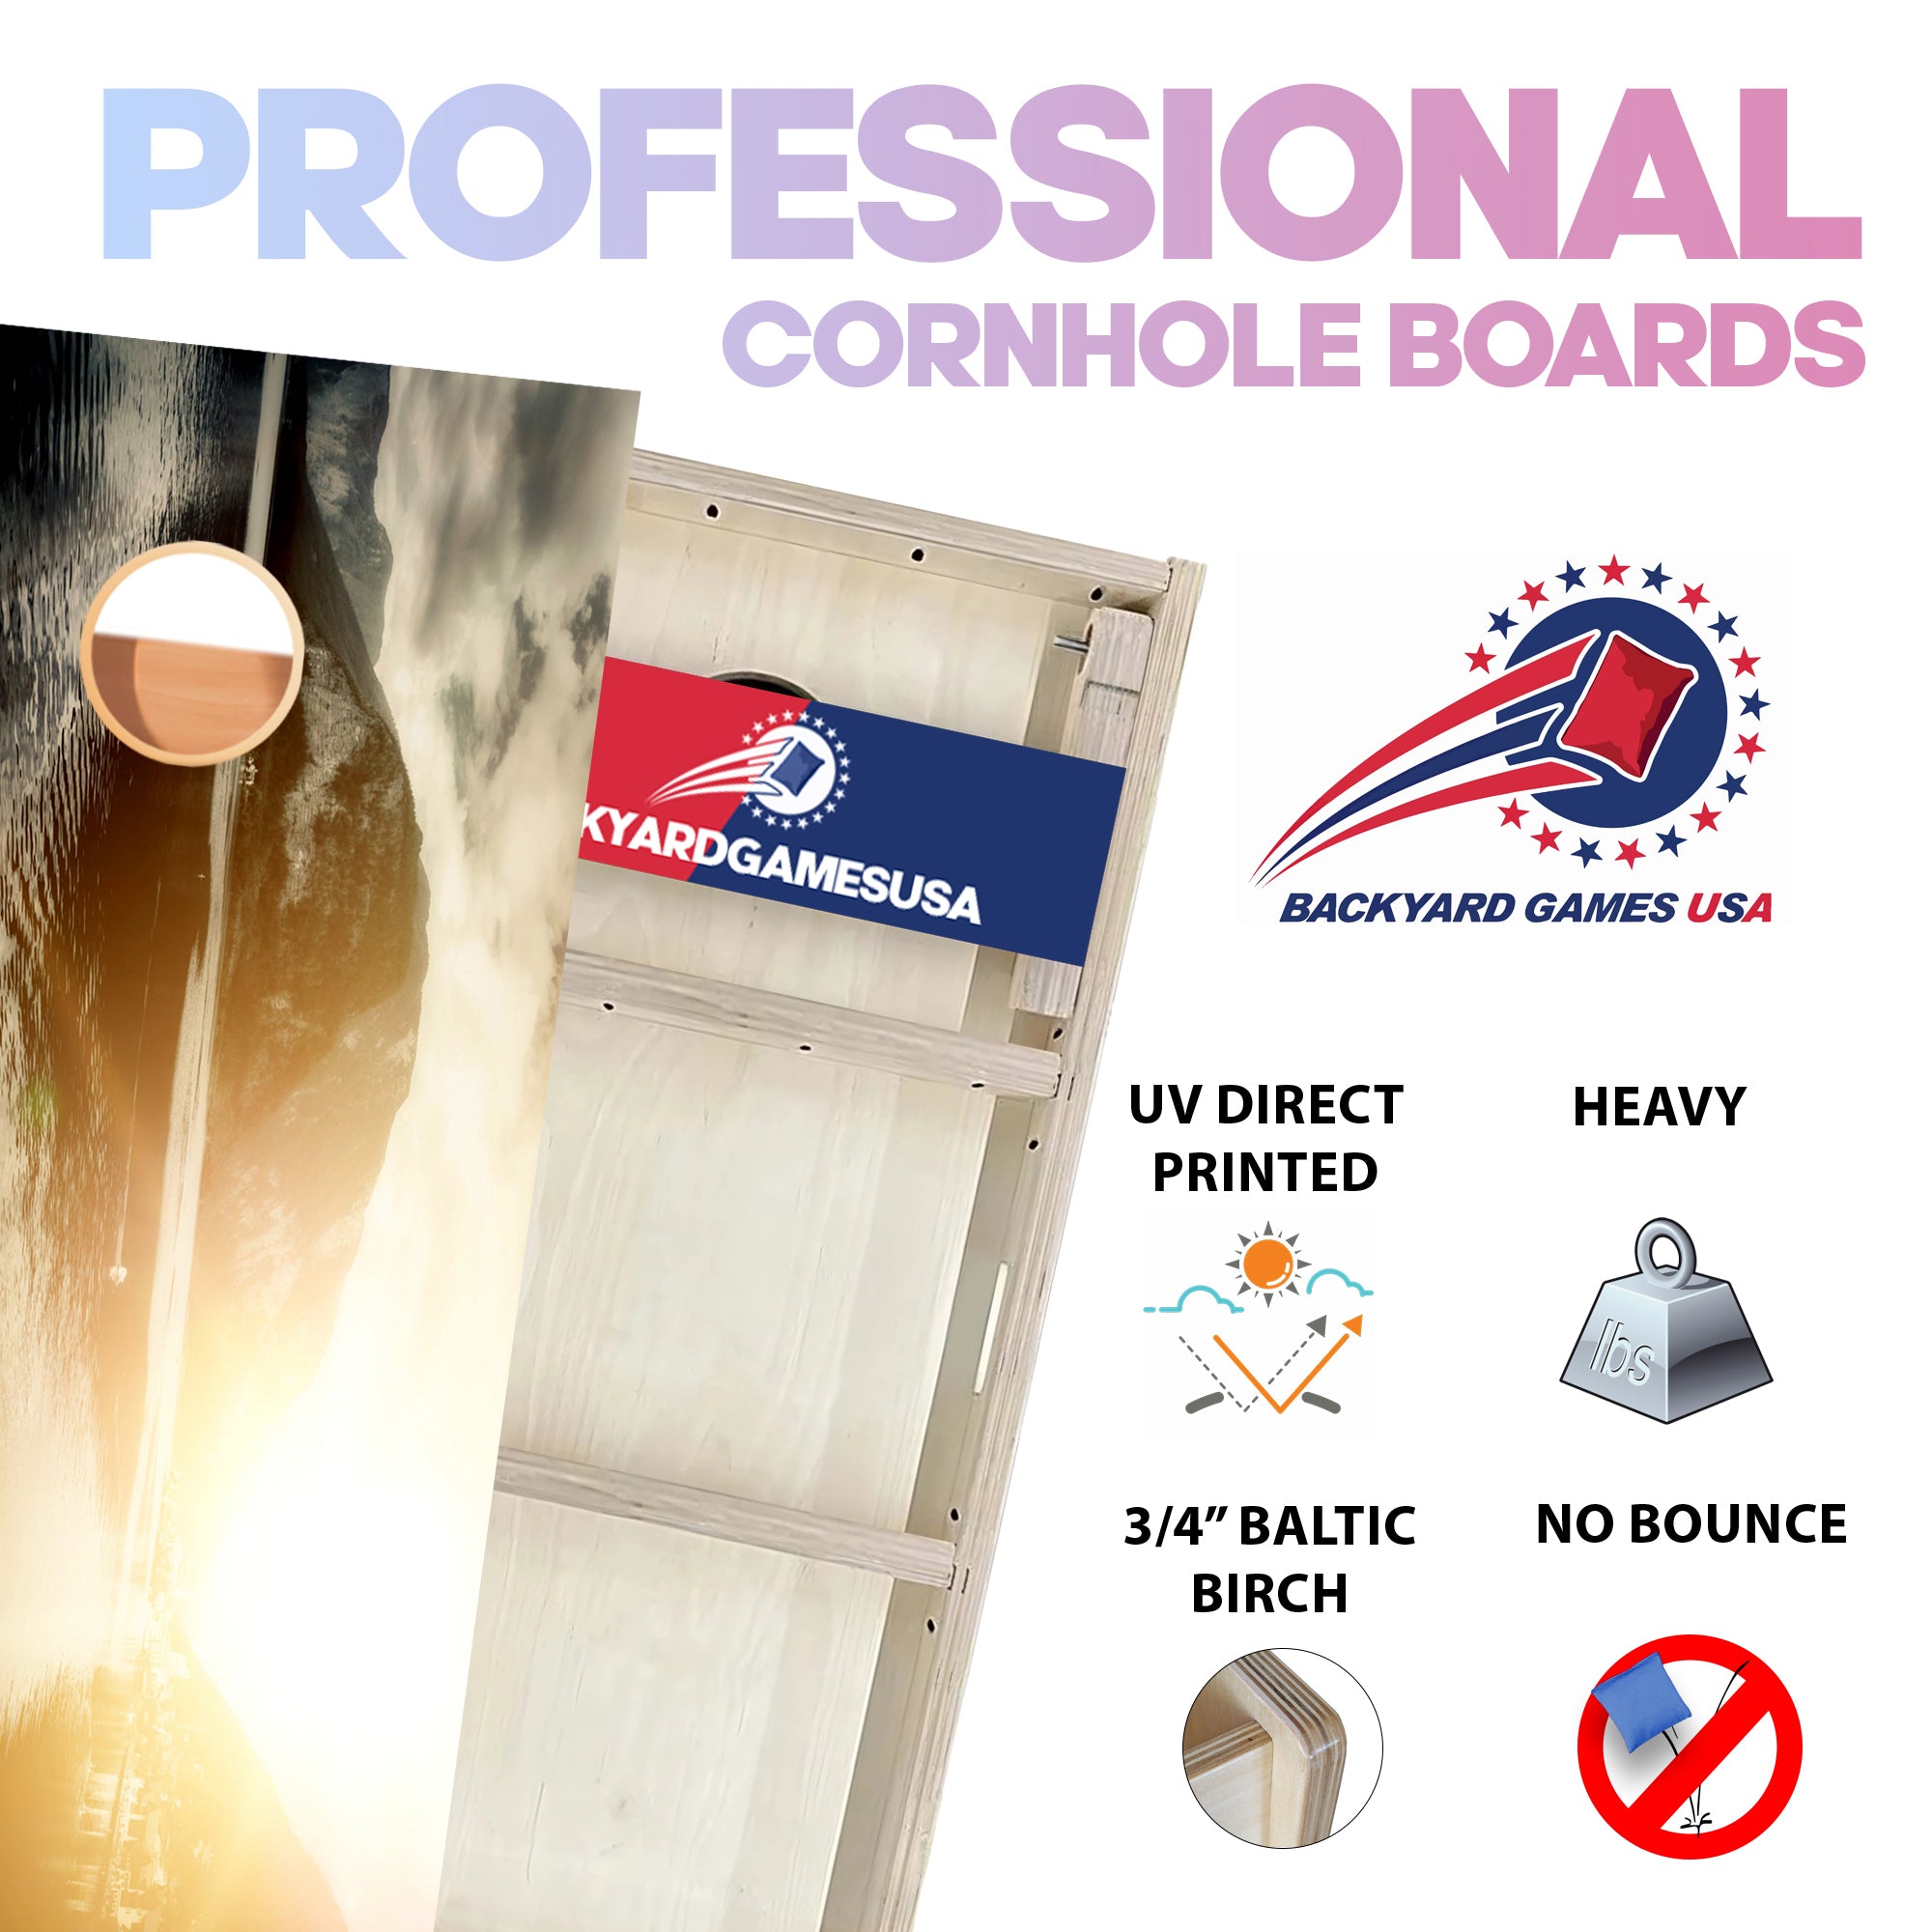 Dock Professional Cornhole Boards